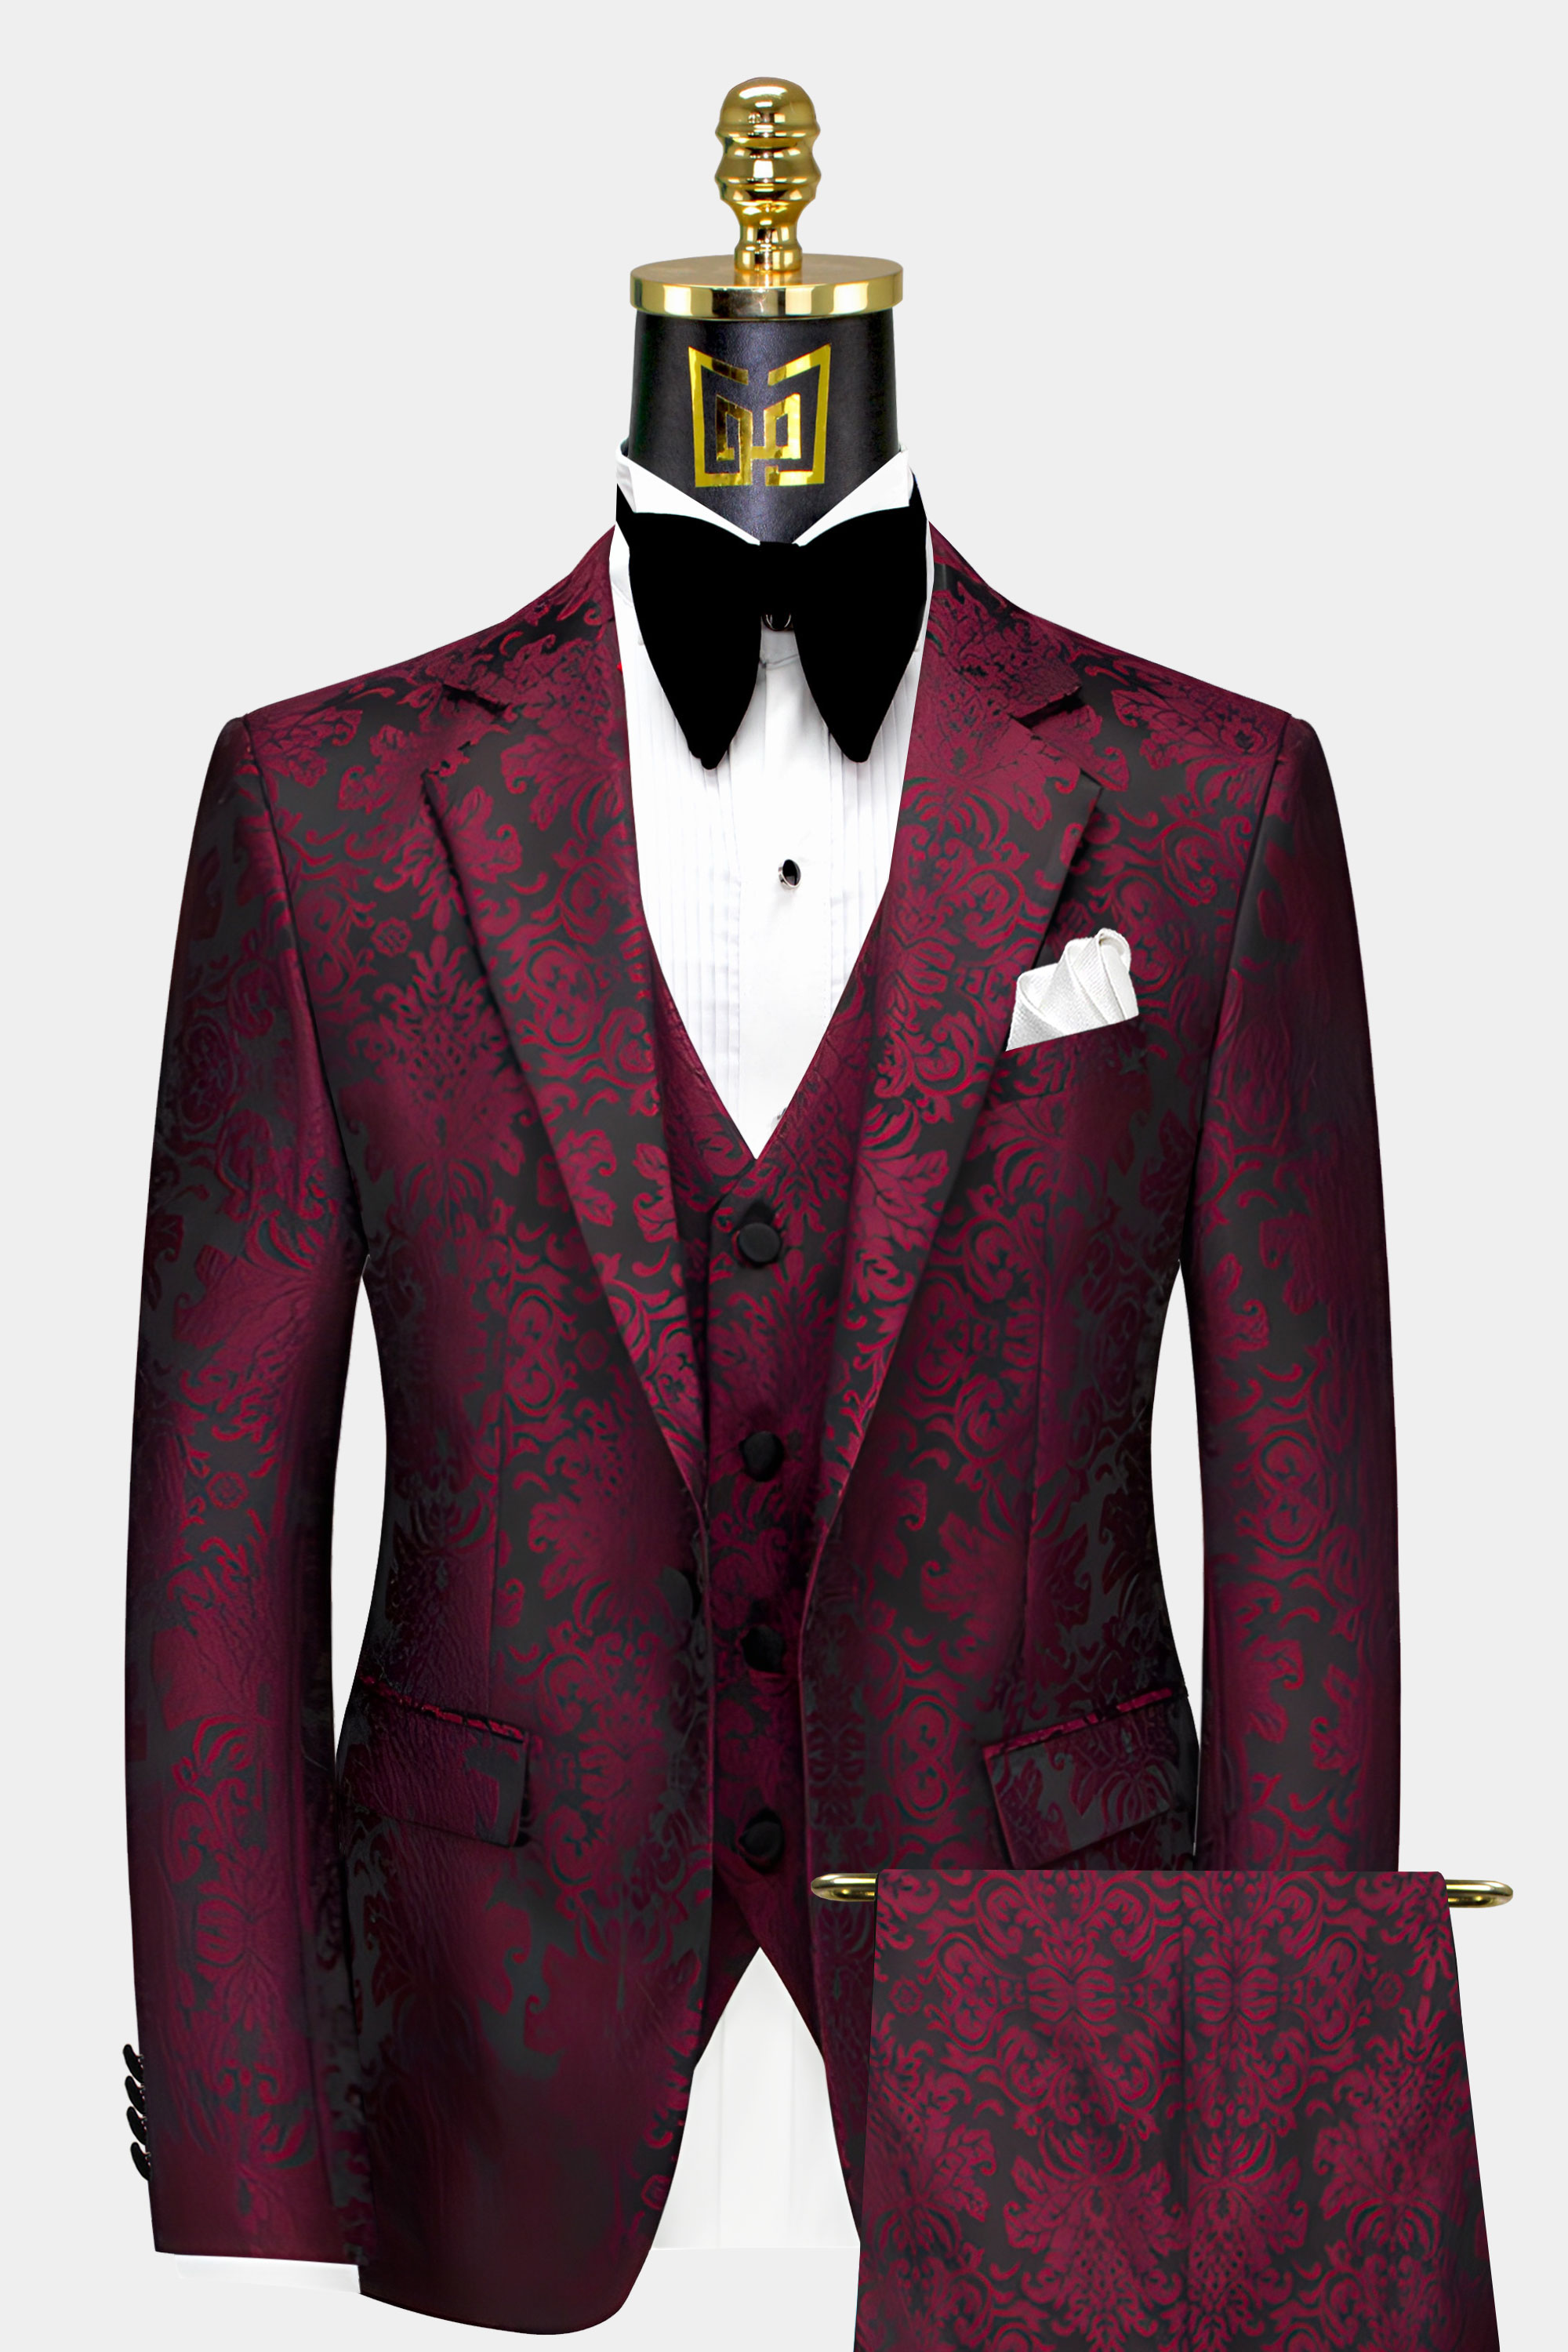 Burgundy and Black Suit | Gentleman's Guru